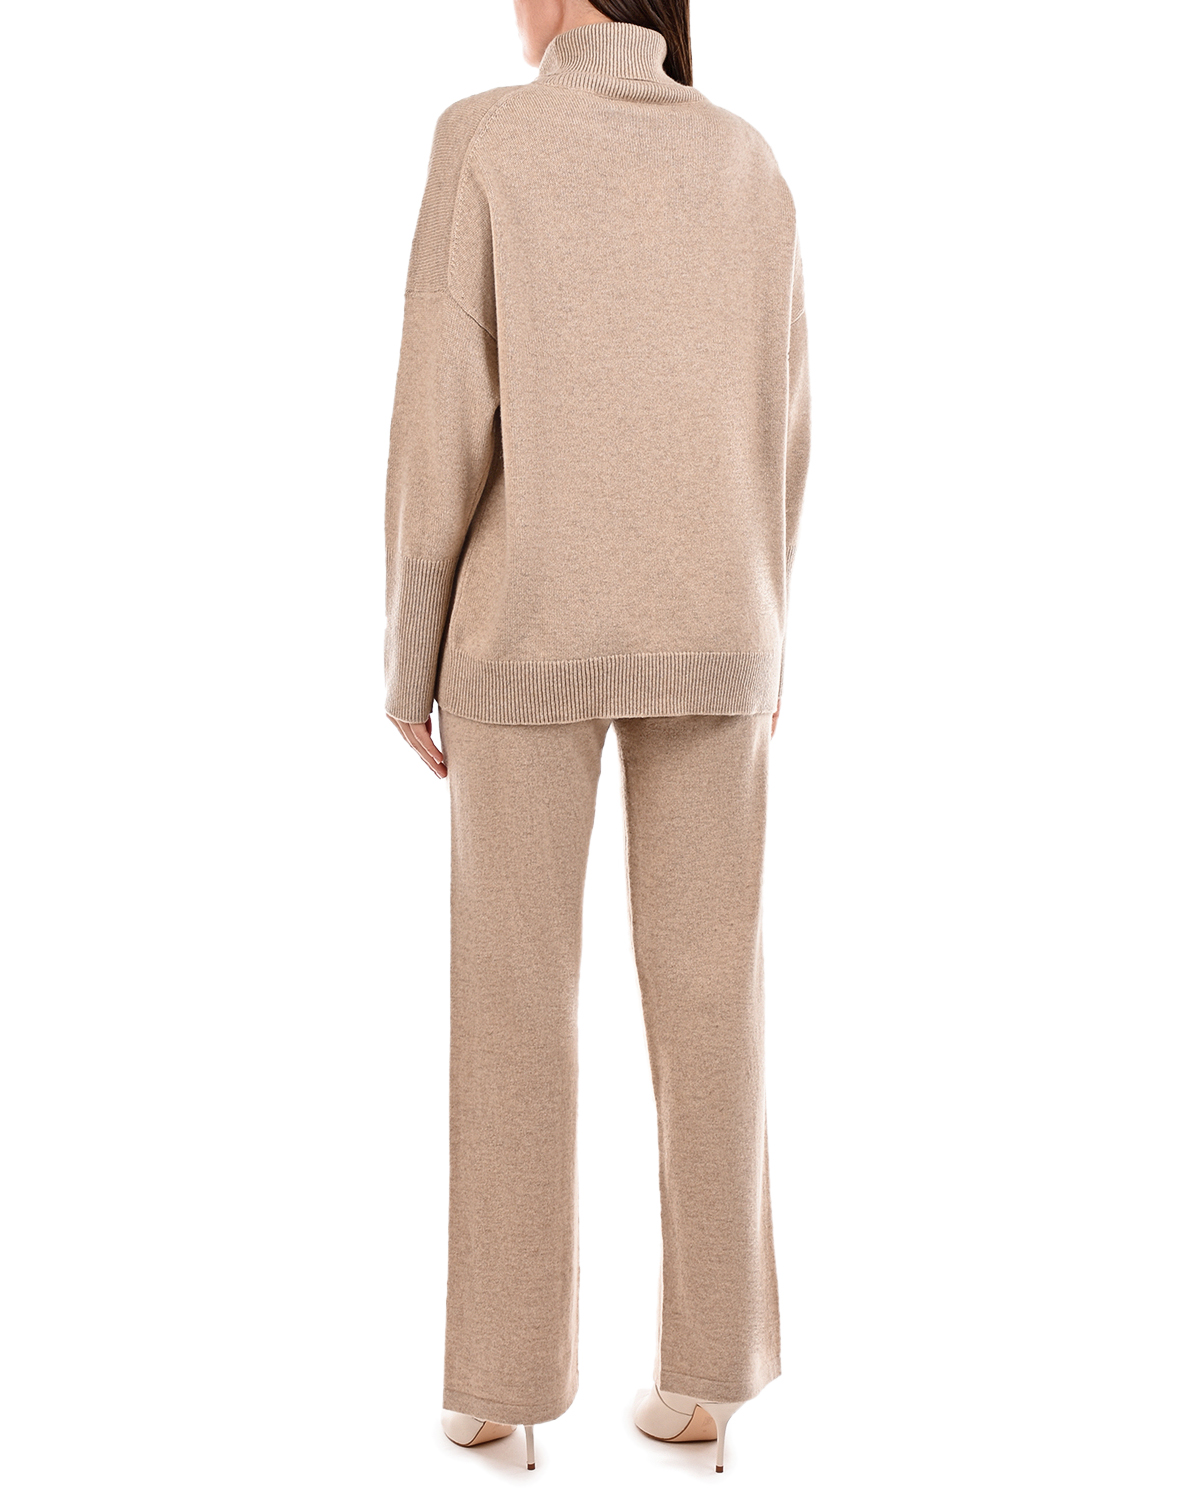 Бежевые брюки с поясом на кулиске Chinti&Parker, размер 38, цвет бежевый - фото 4